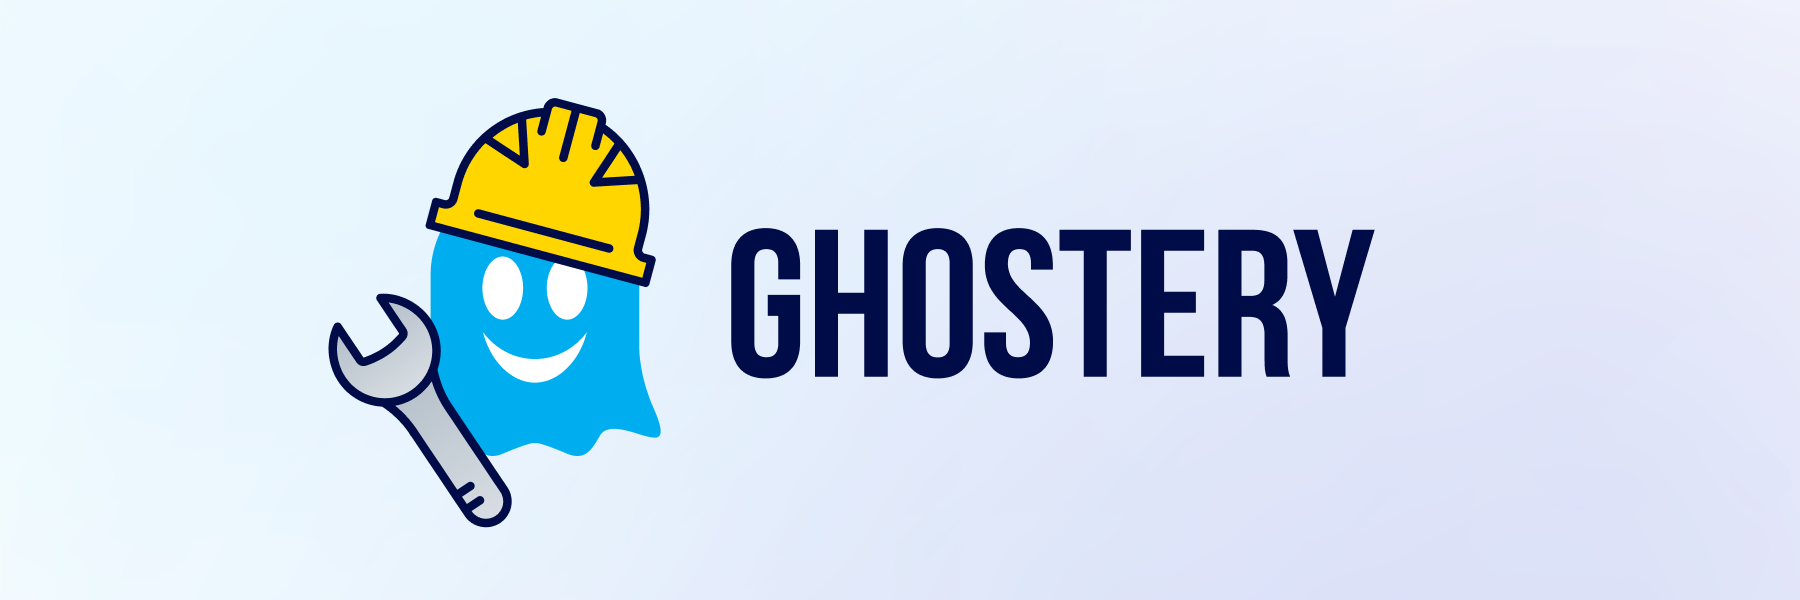 Ghostery Development